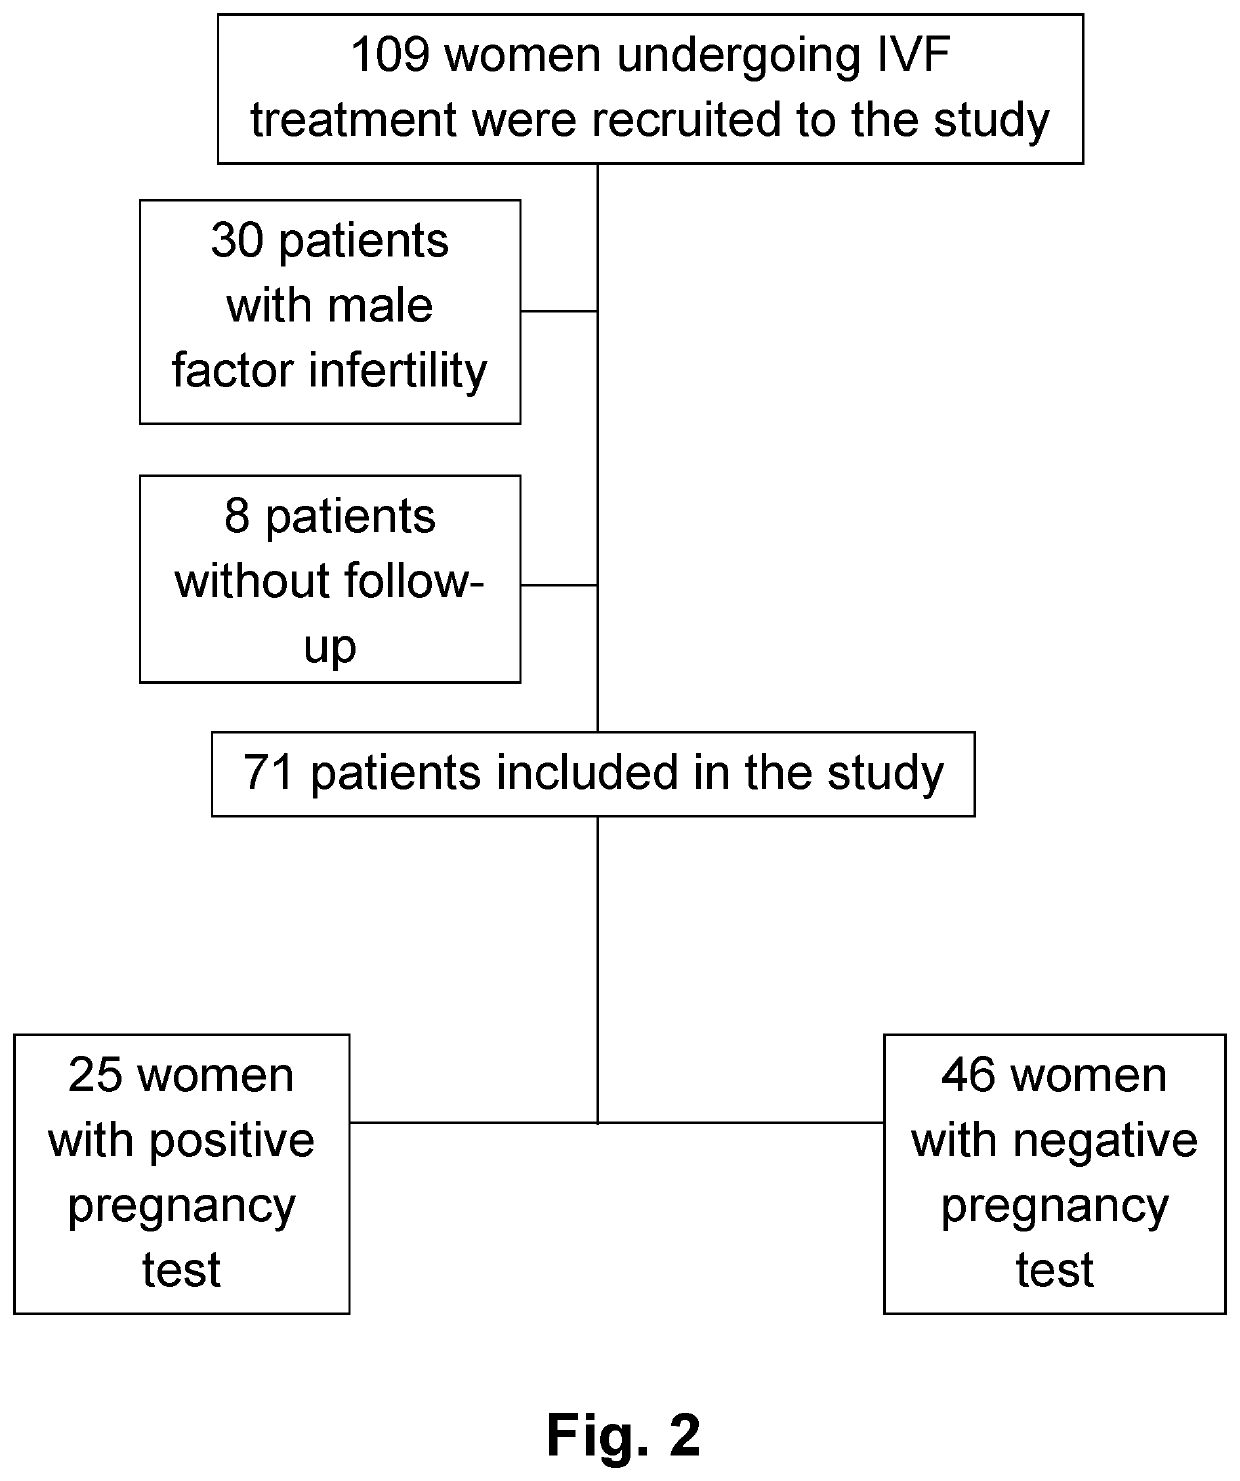 Lipid profiling methods for predicting positive pregnancy outcome